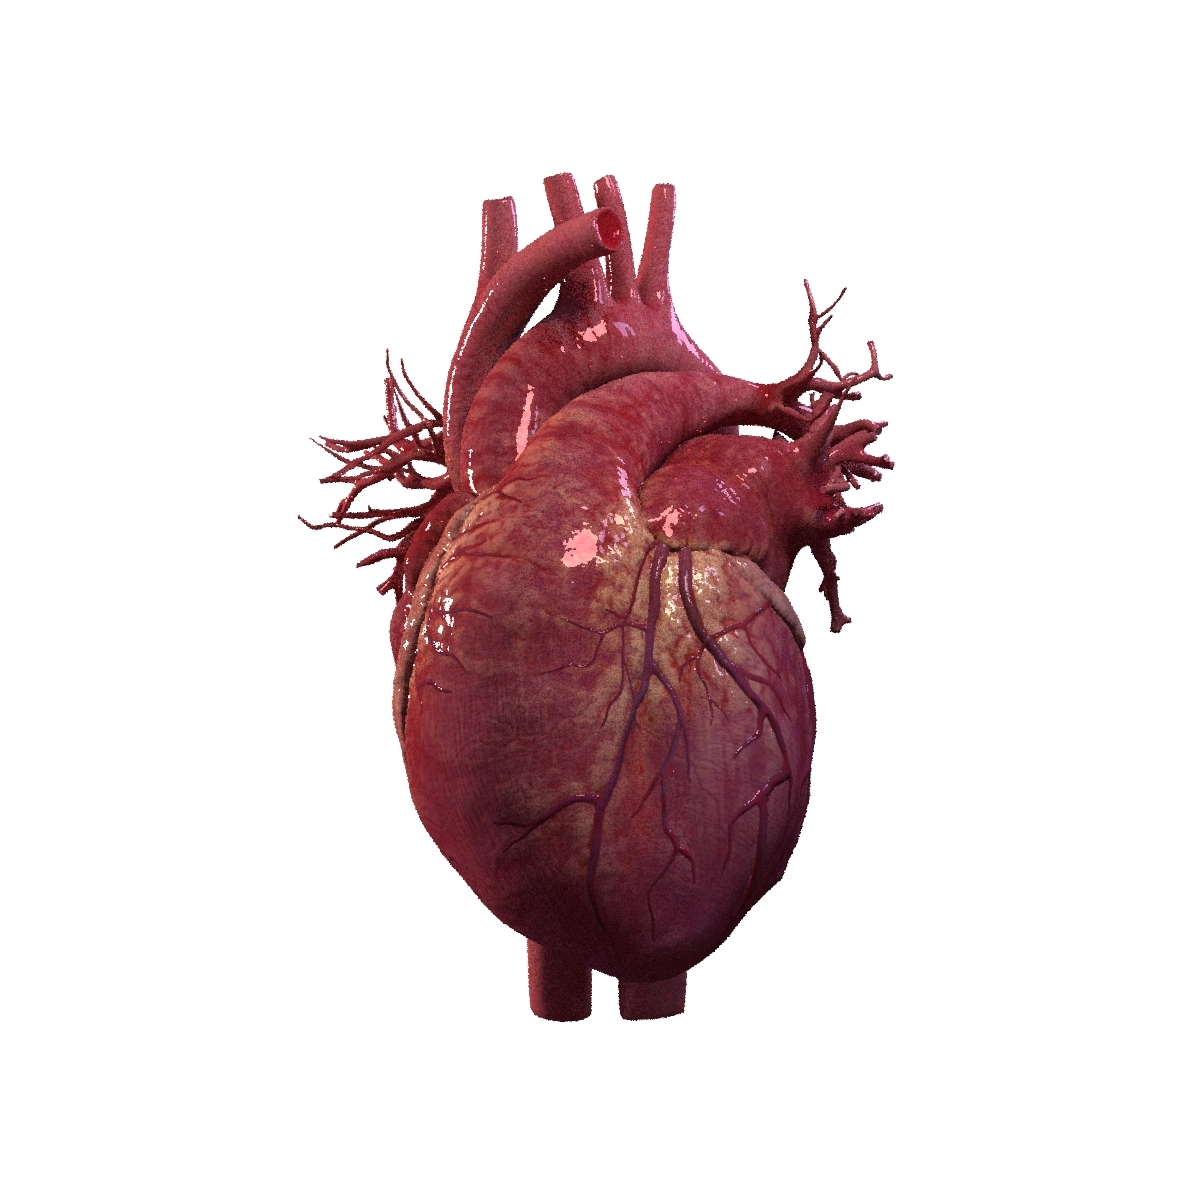 Human heart animation 3D model - TurboSquid 1473267